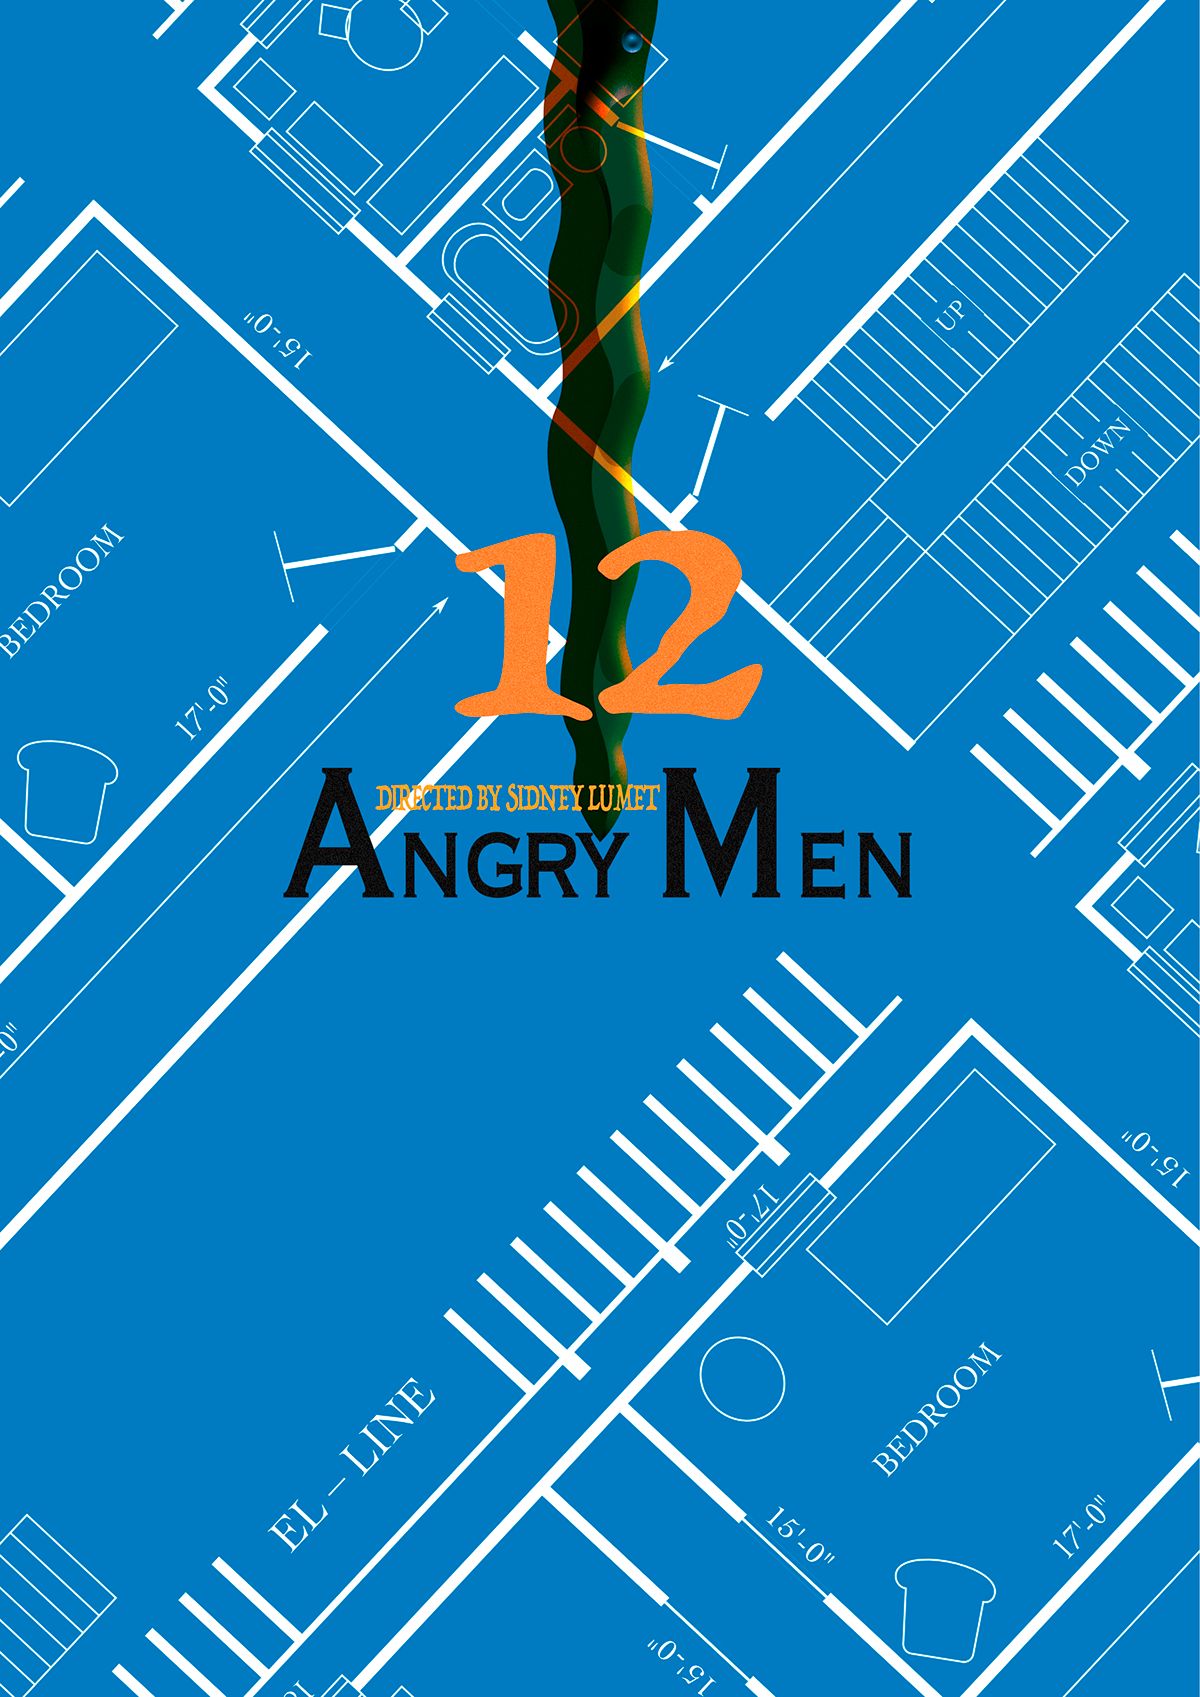 12 angry men 十二怒汉 sidney lumet affinity designer Affinity Photo